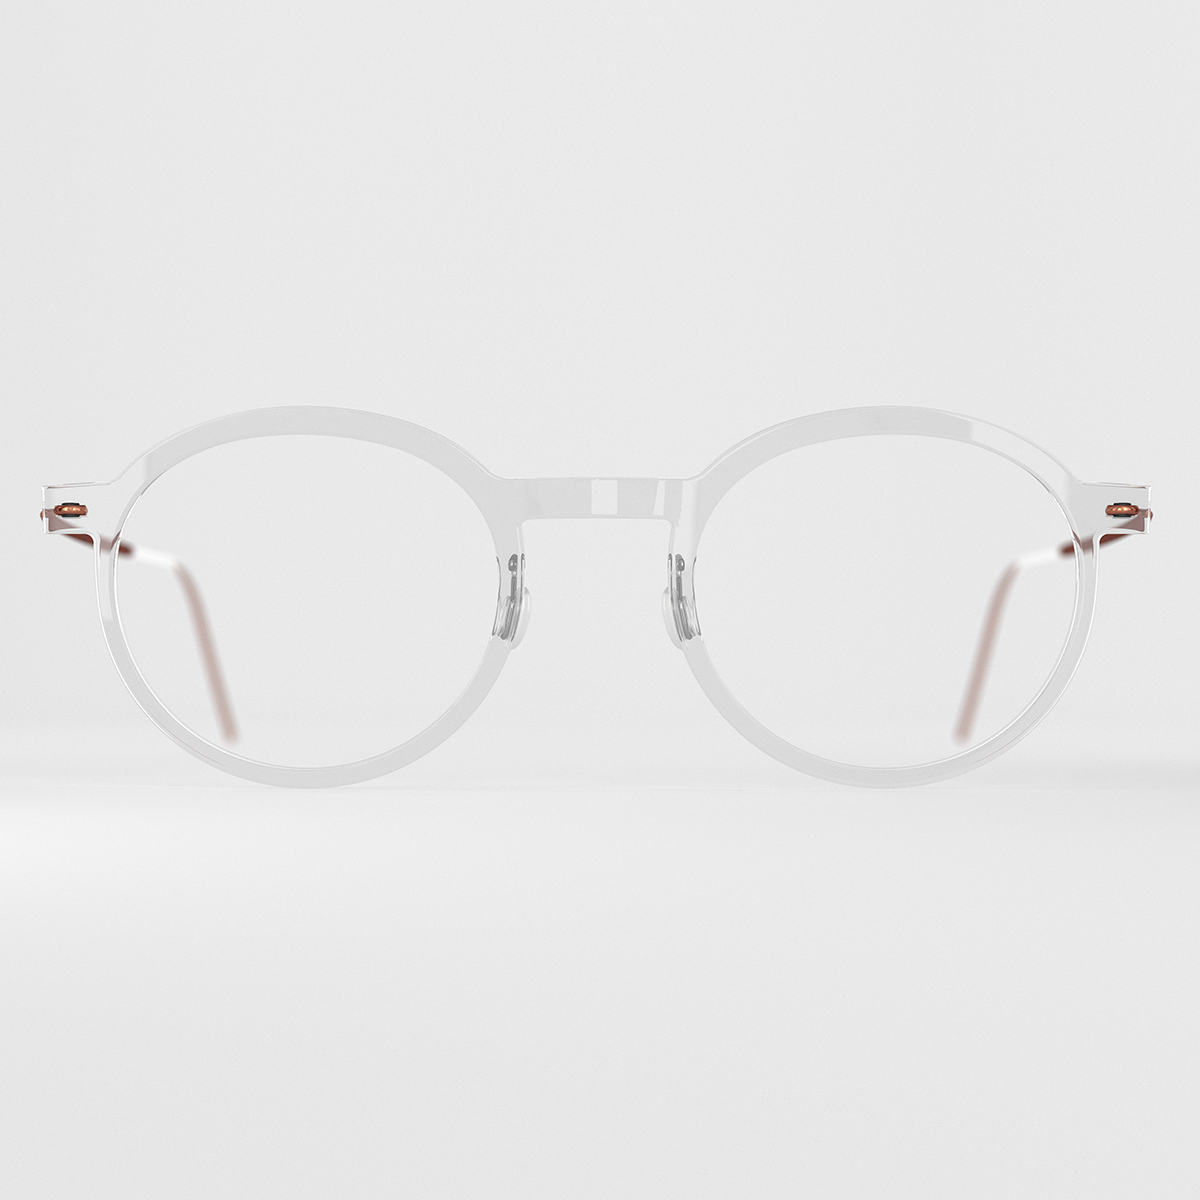 LINDBERG acetanium Model 6586 round panto shape glasses in a transparent colour with brown titanium temples